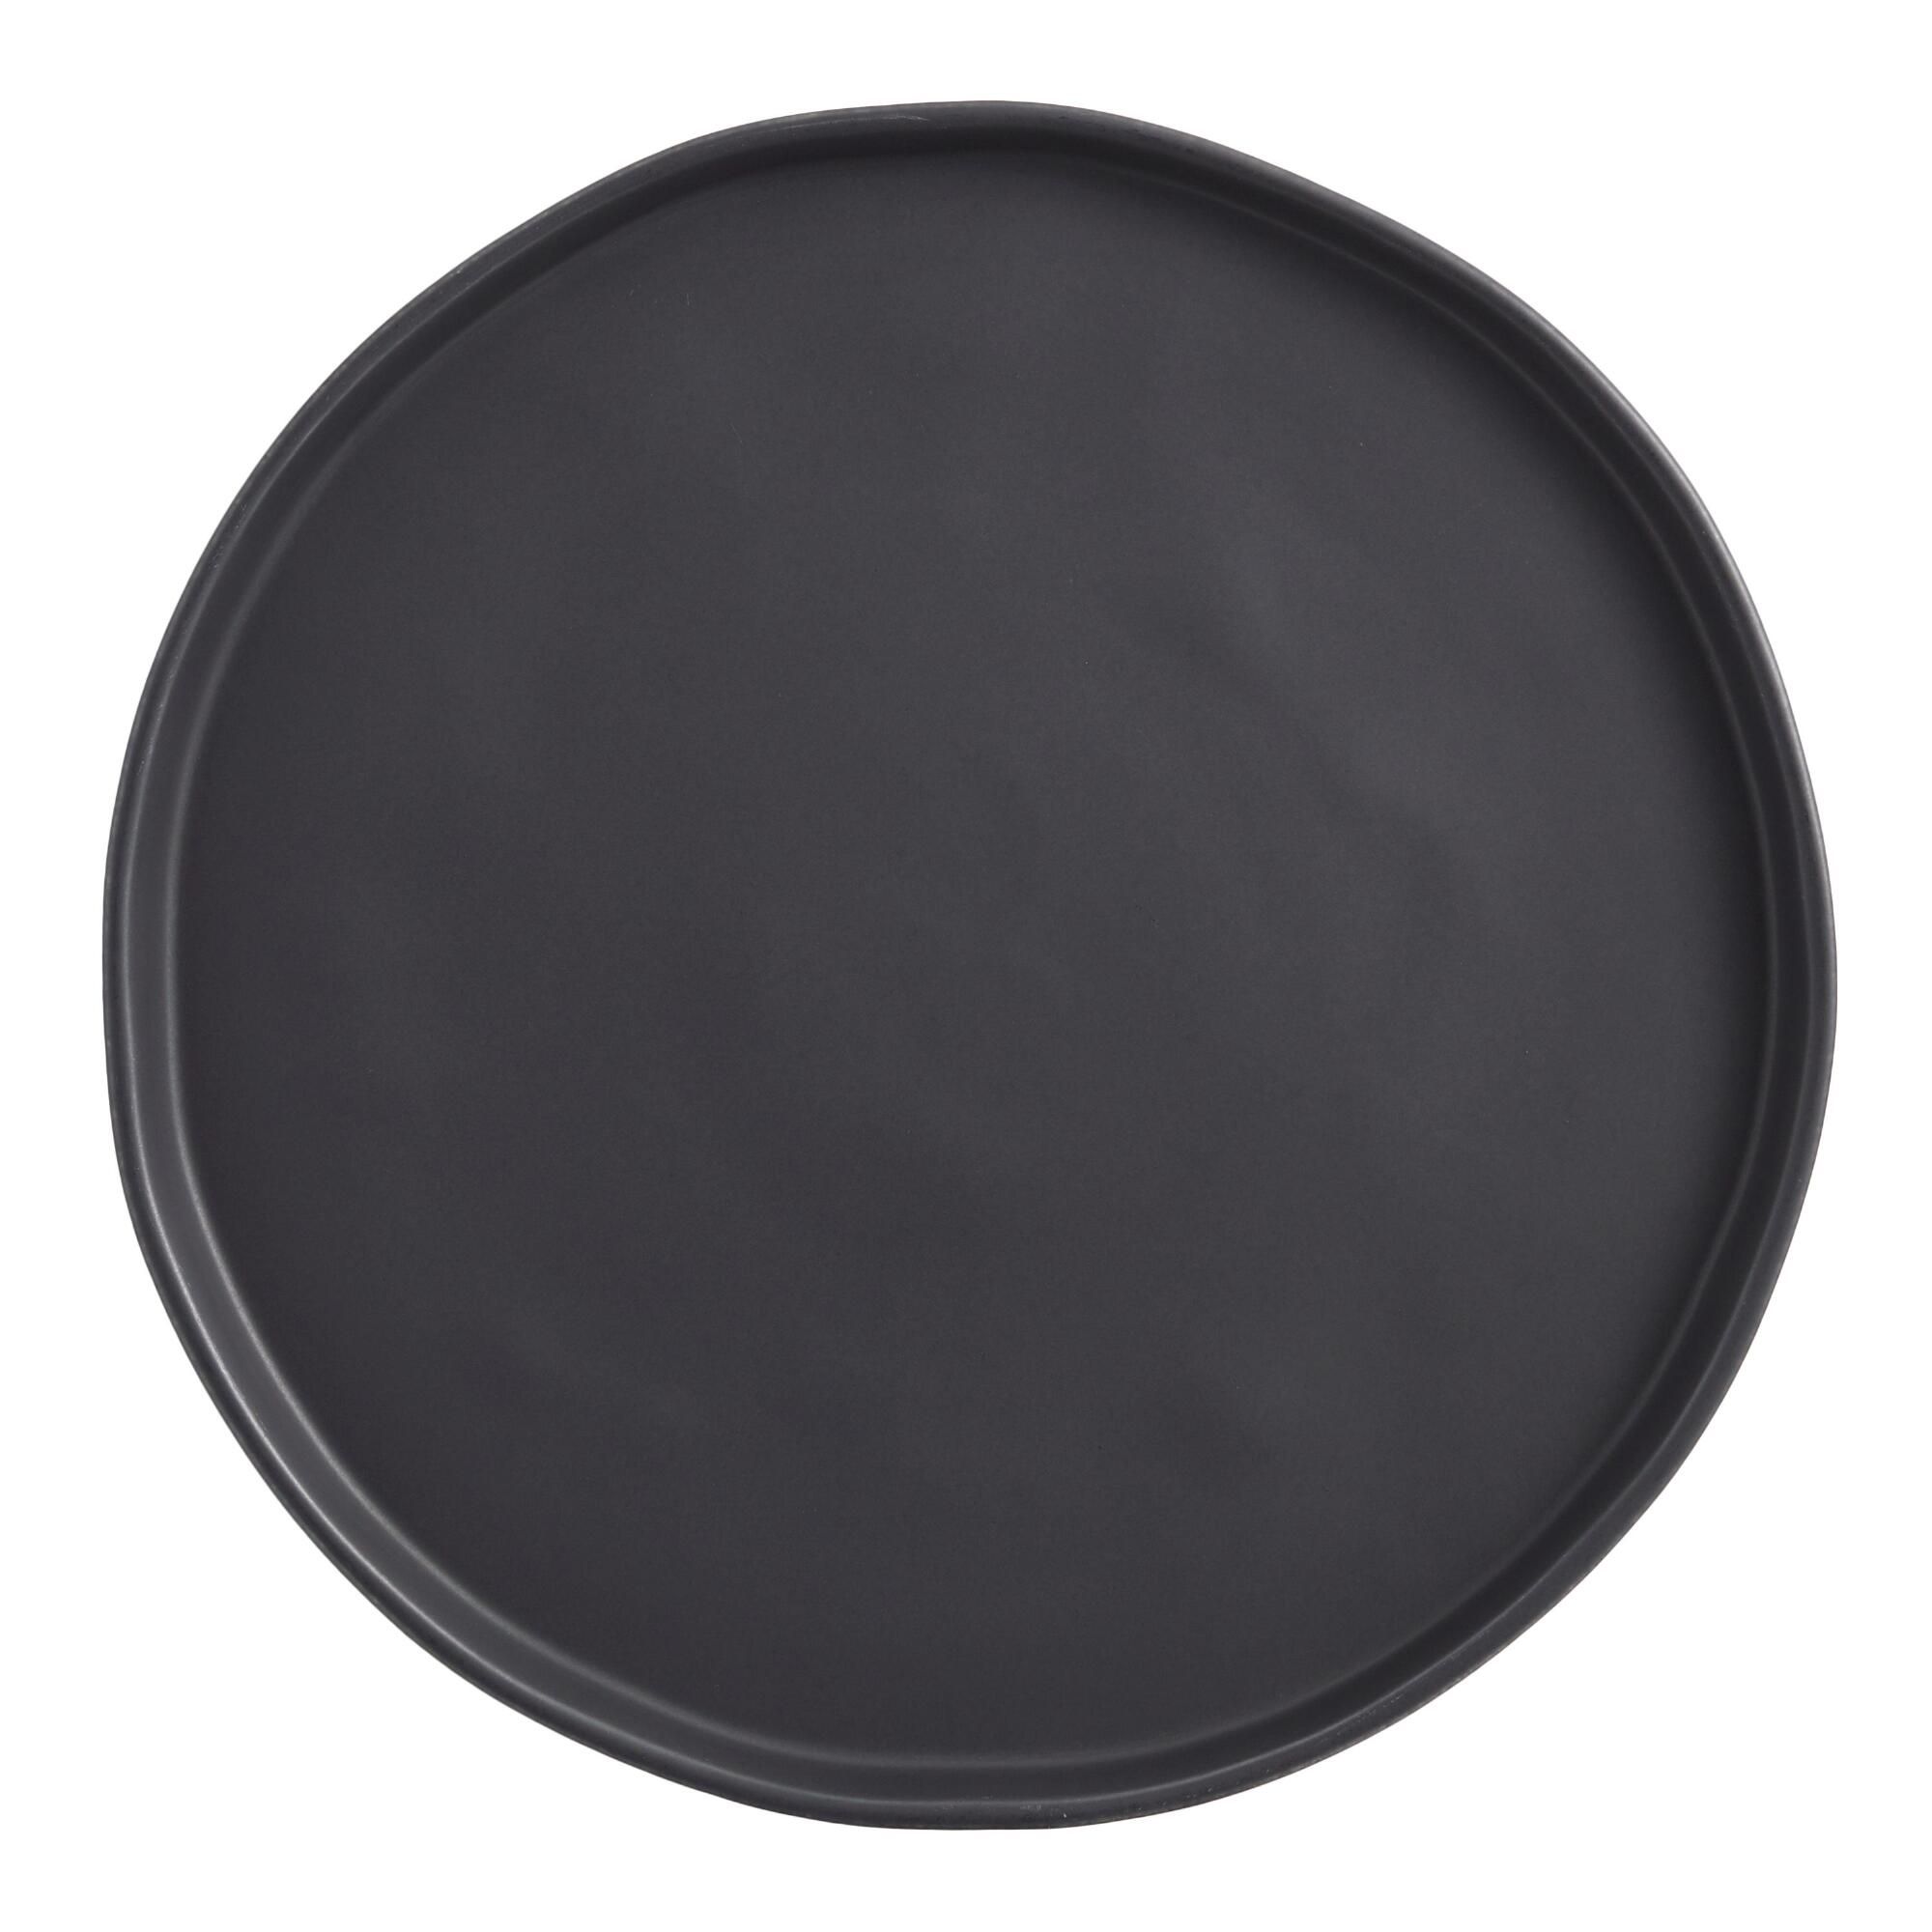 Black Organic Rimmed Dinner Plates, Set of 6 by World Market | World Market